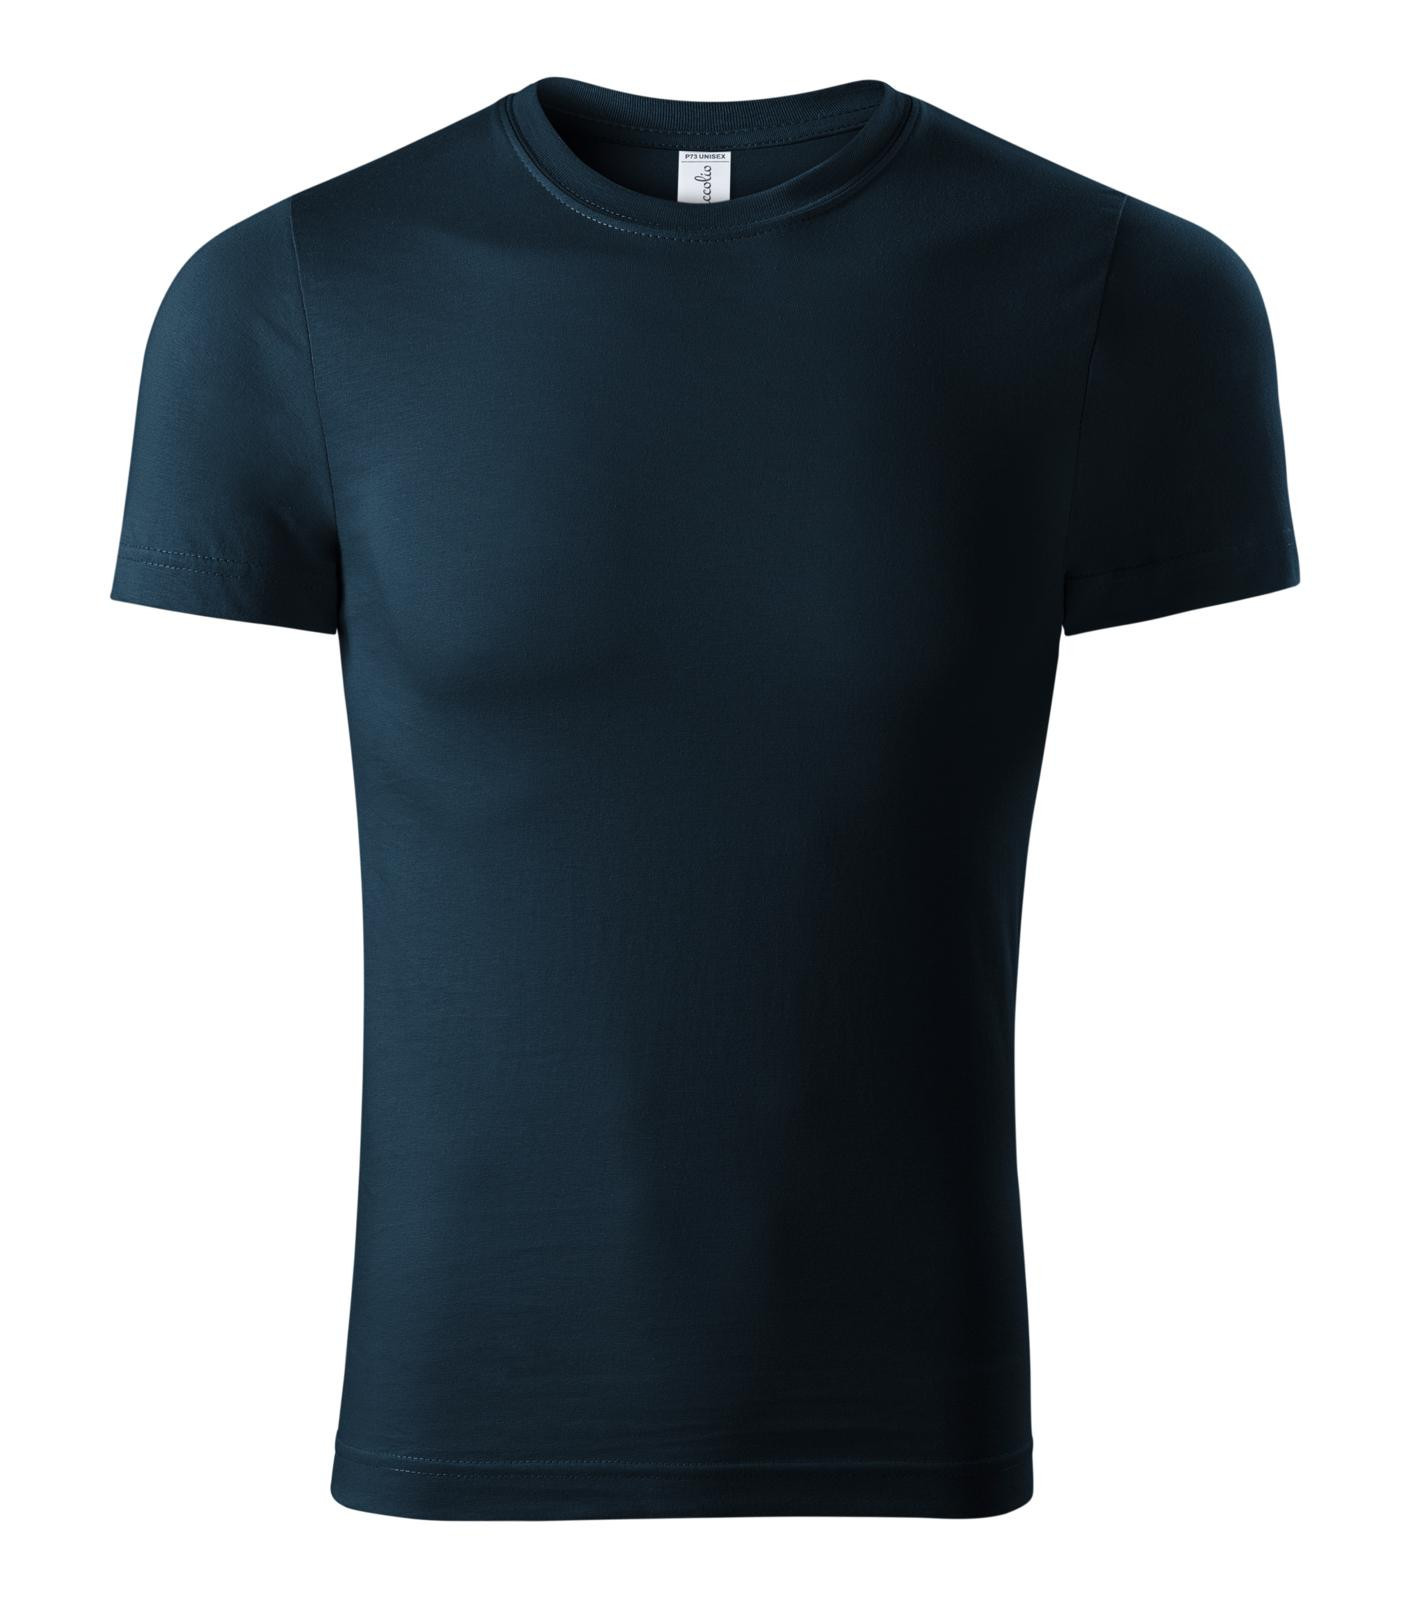 Unisex tričko Piccolio Paint P73 - veľkosť: XXL, farba: tmavo modrá